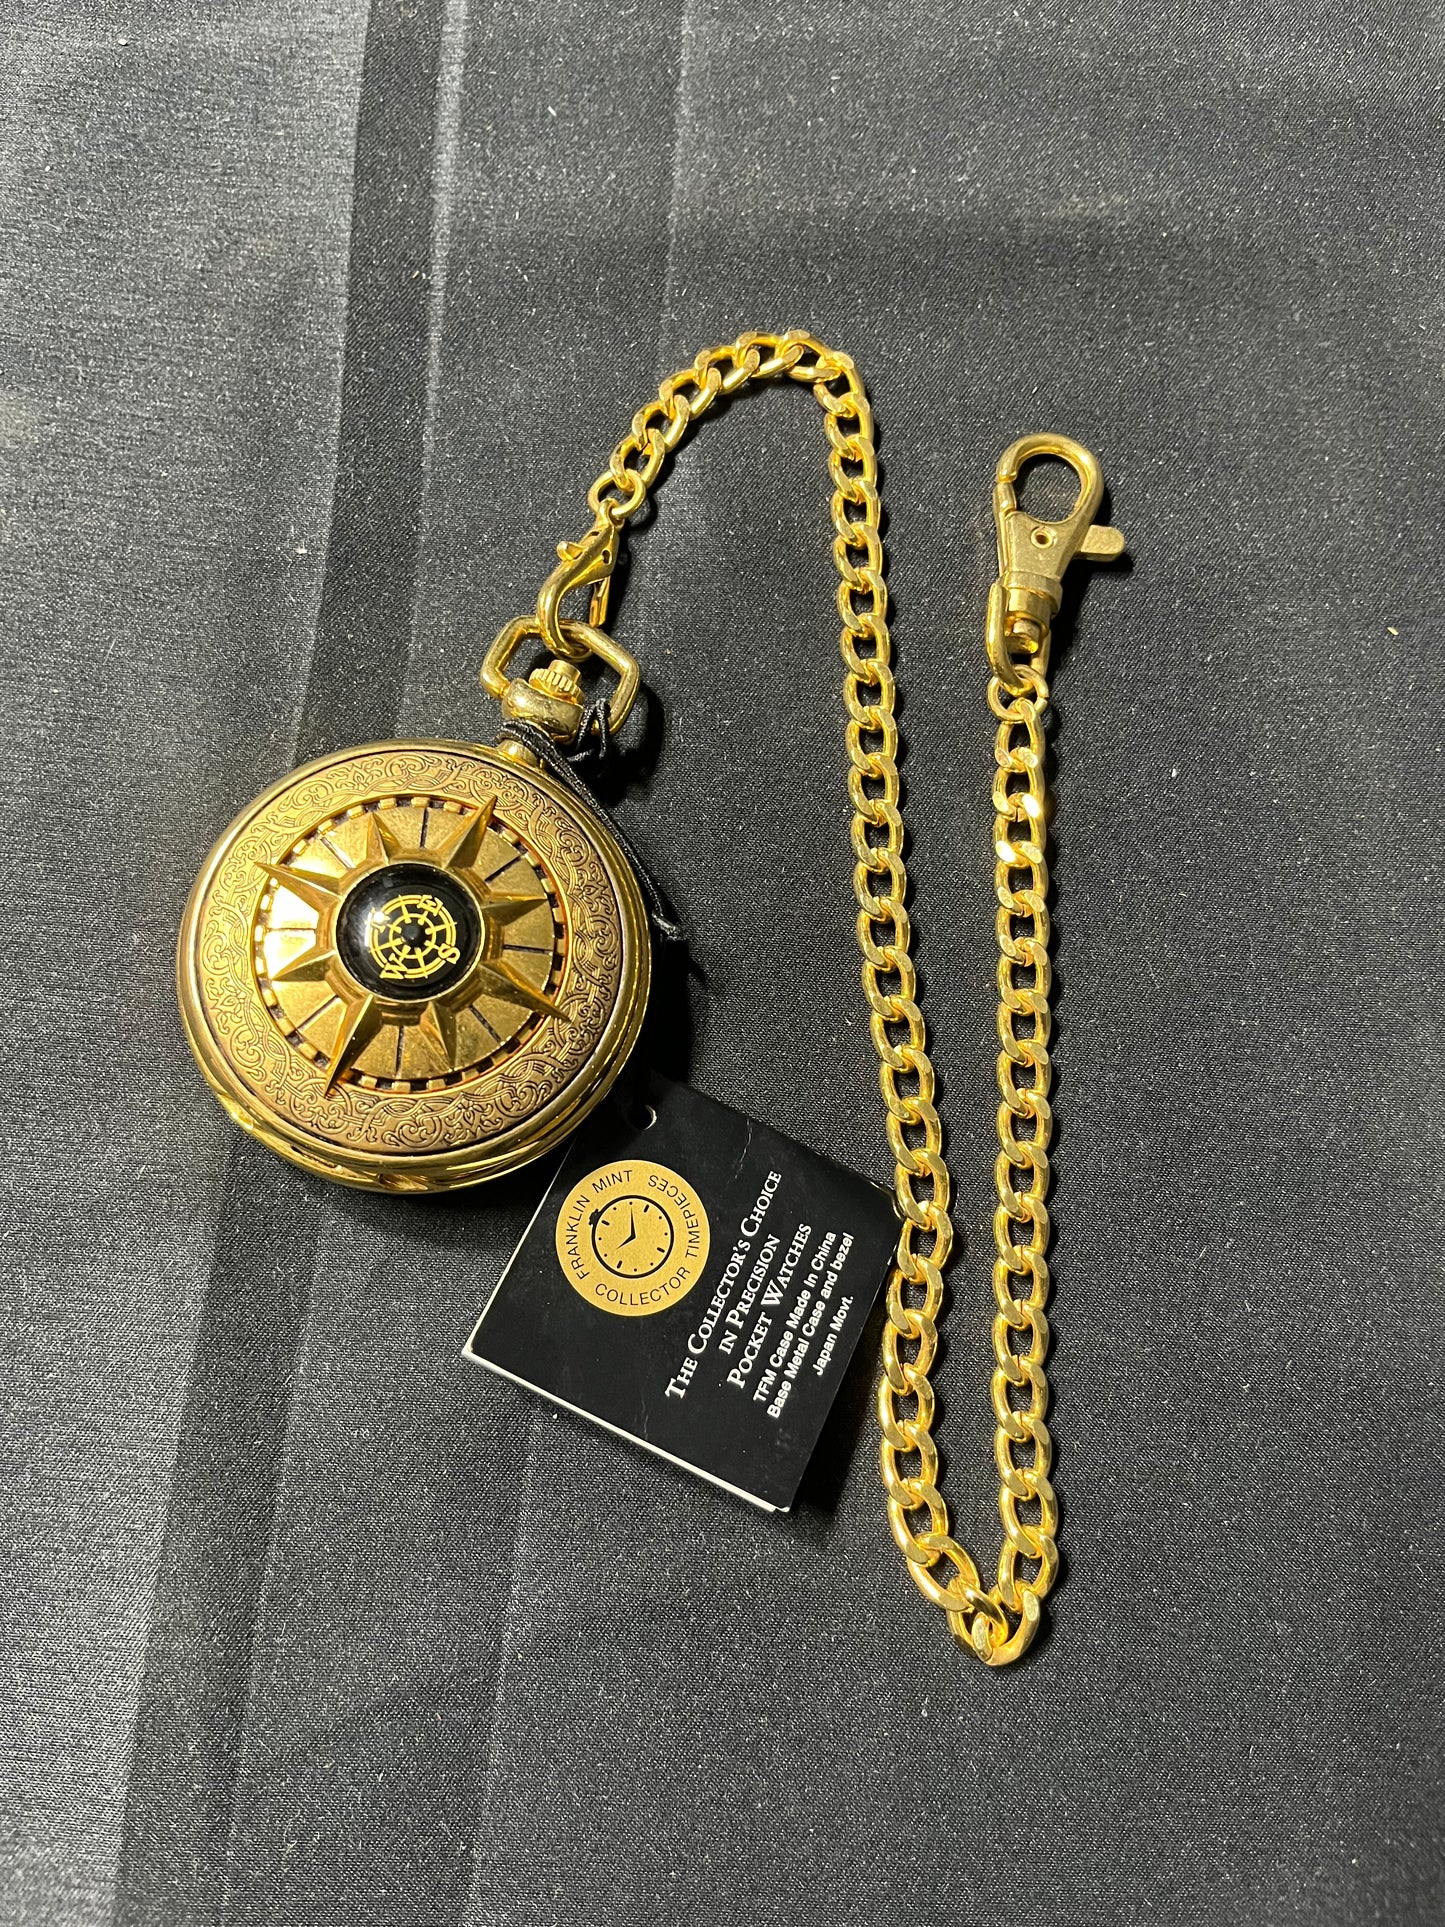 Franklin Mint National Maritime Historical Society Pocket Watch - Cutty Sark